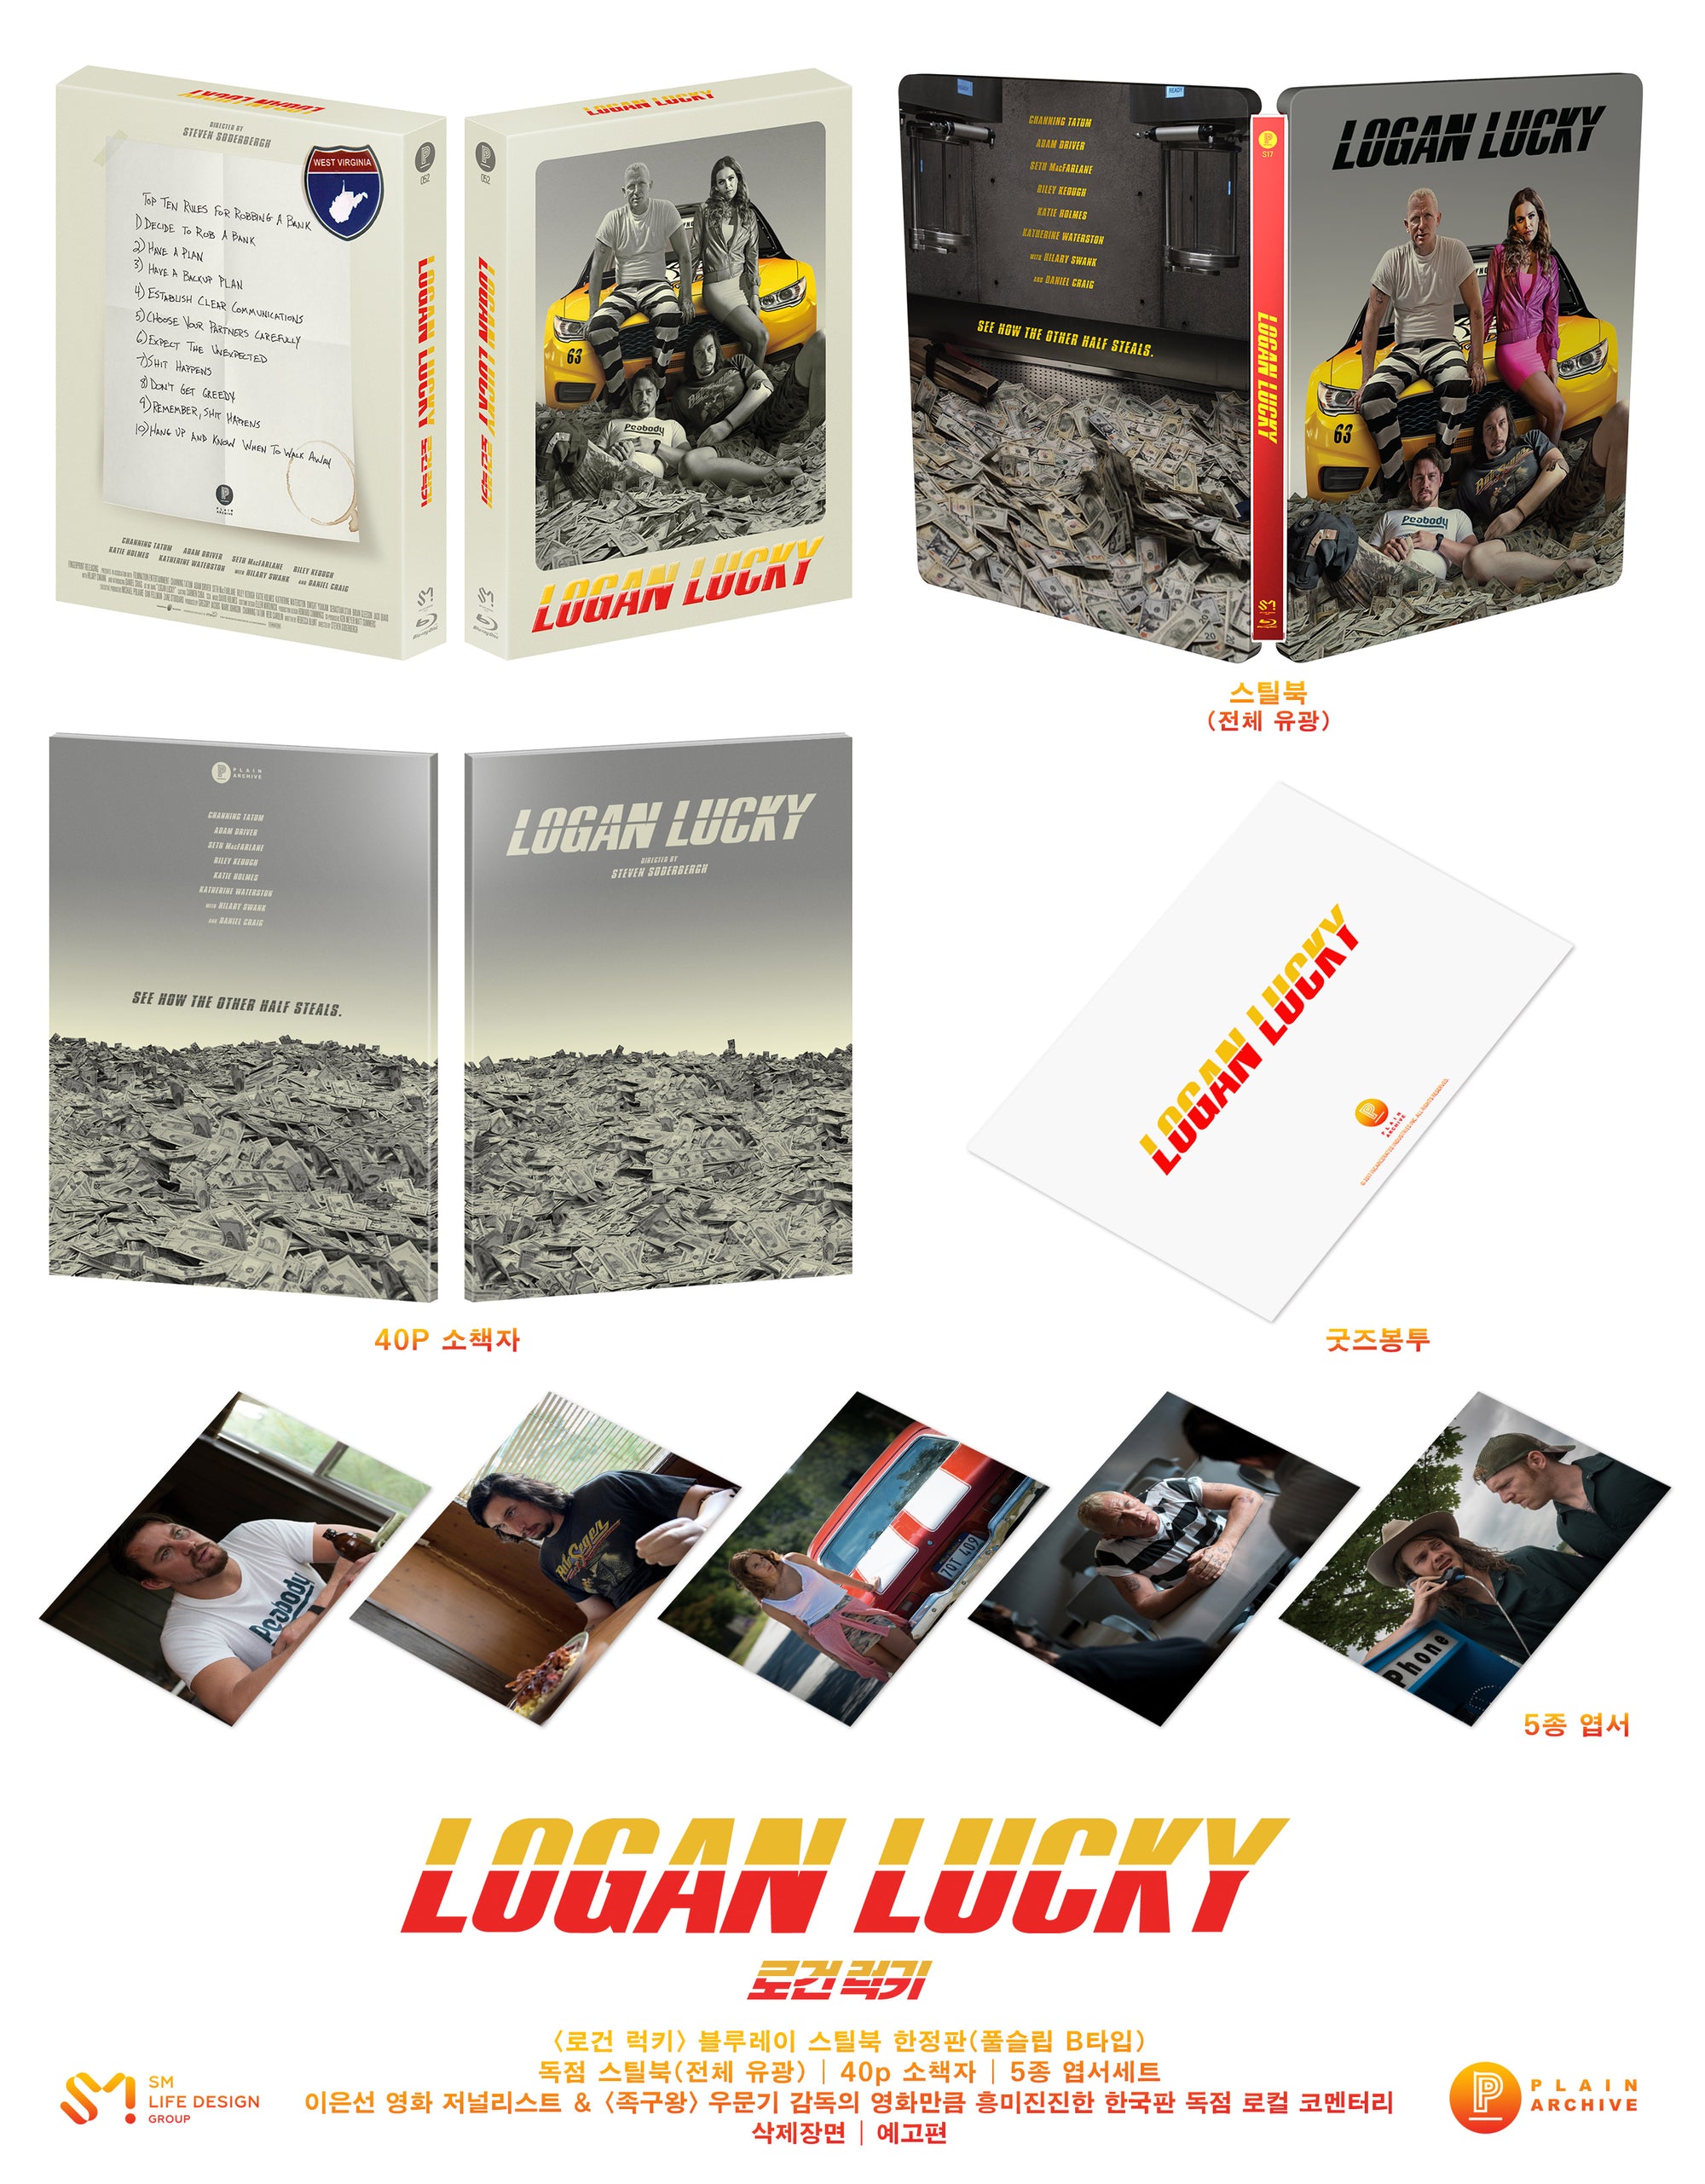 LOGAN LUCKY Blu-ray Steelbook: Triple Pack